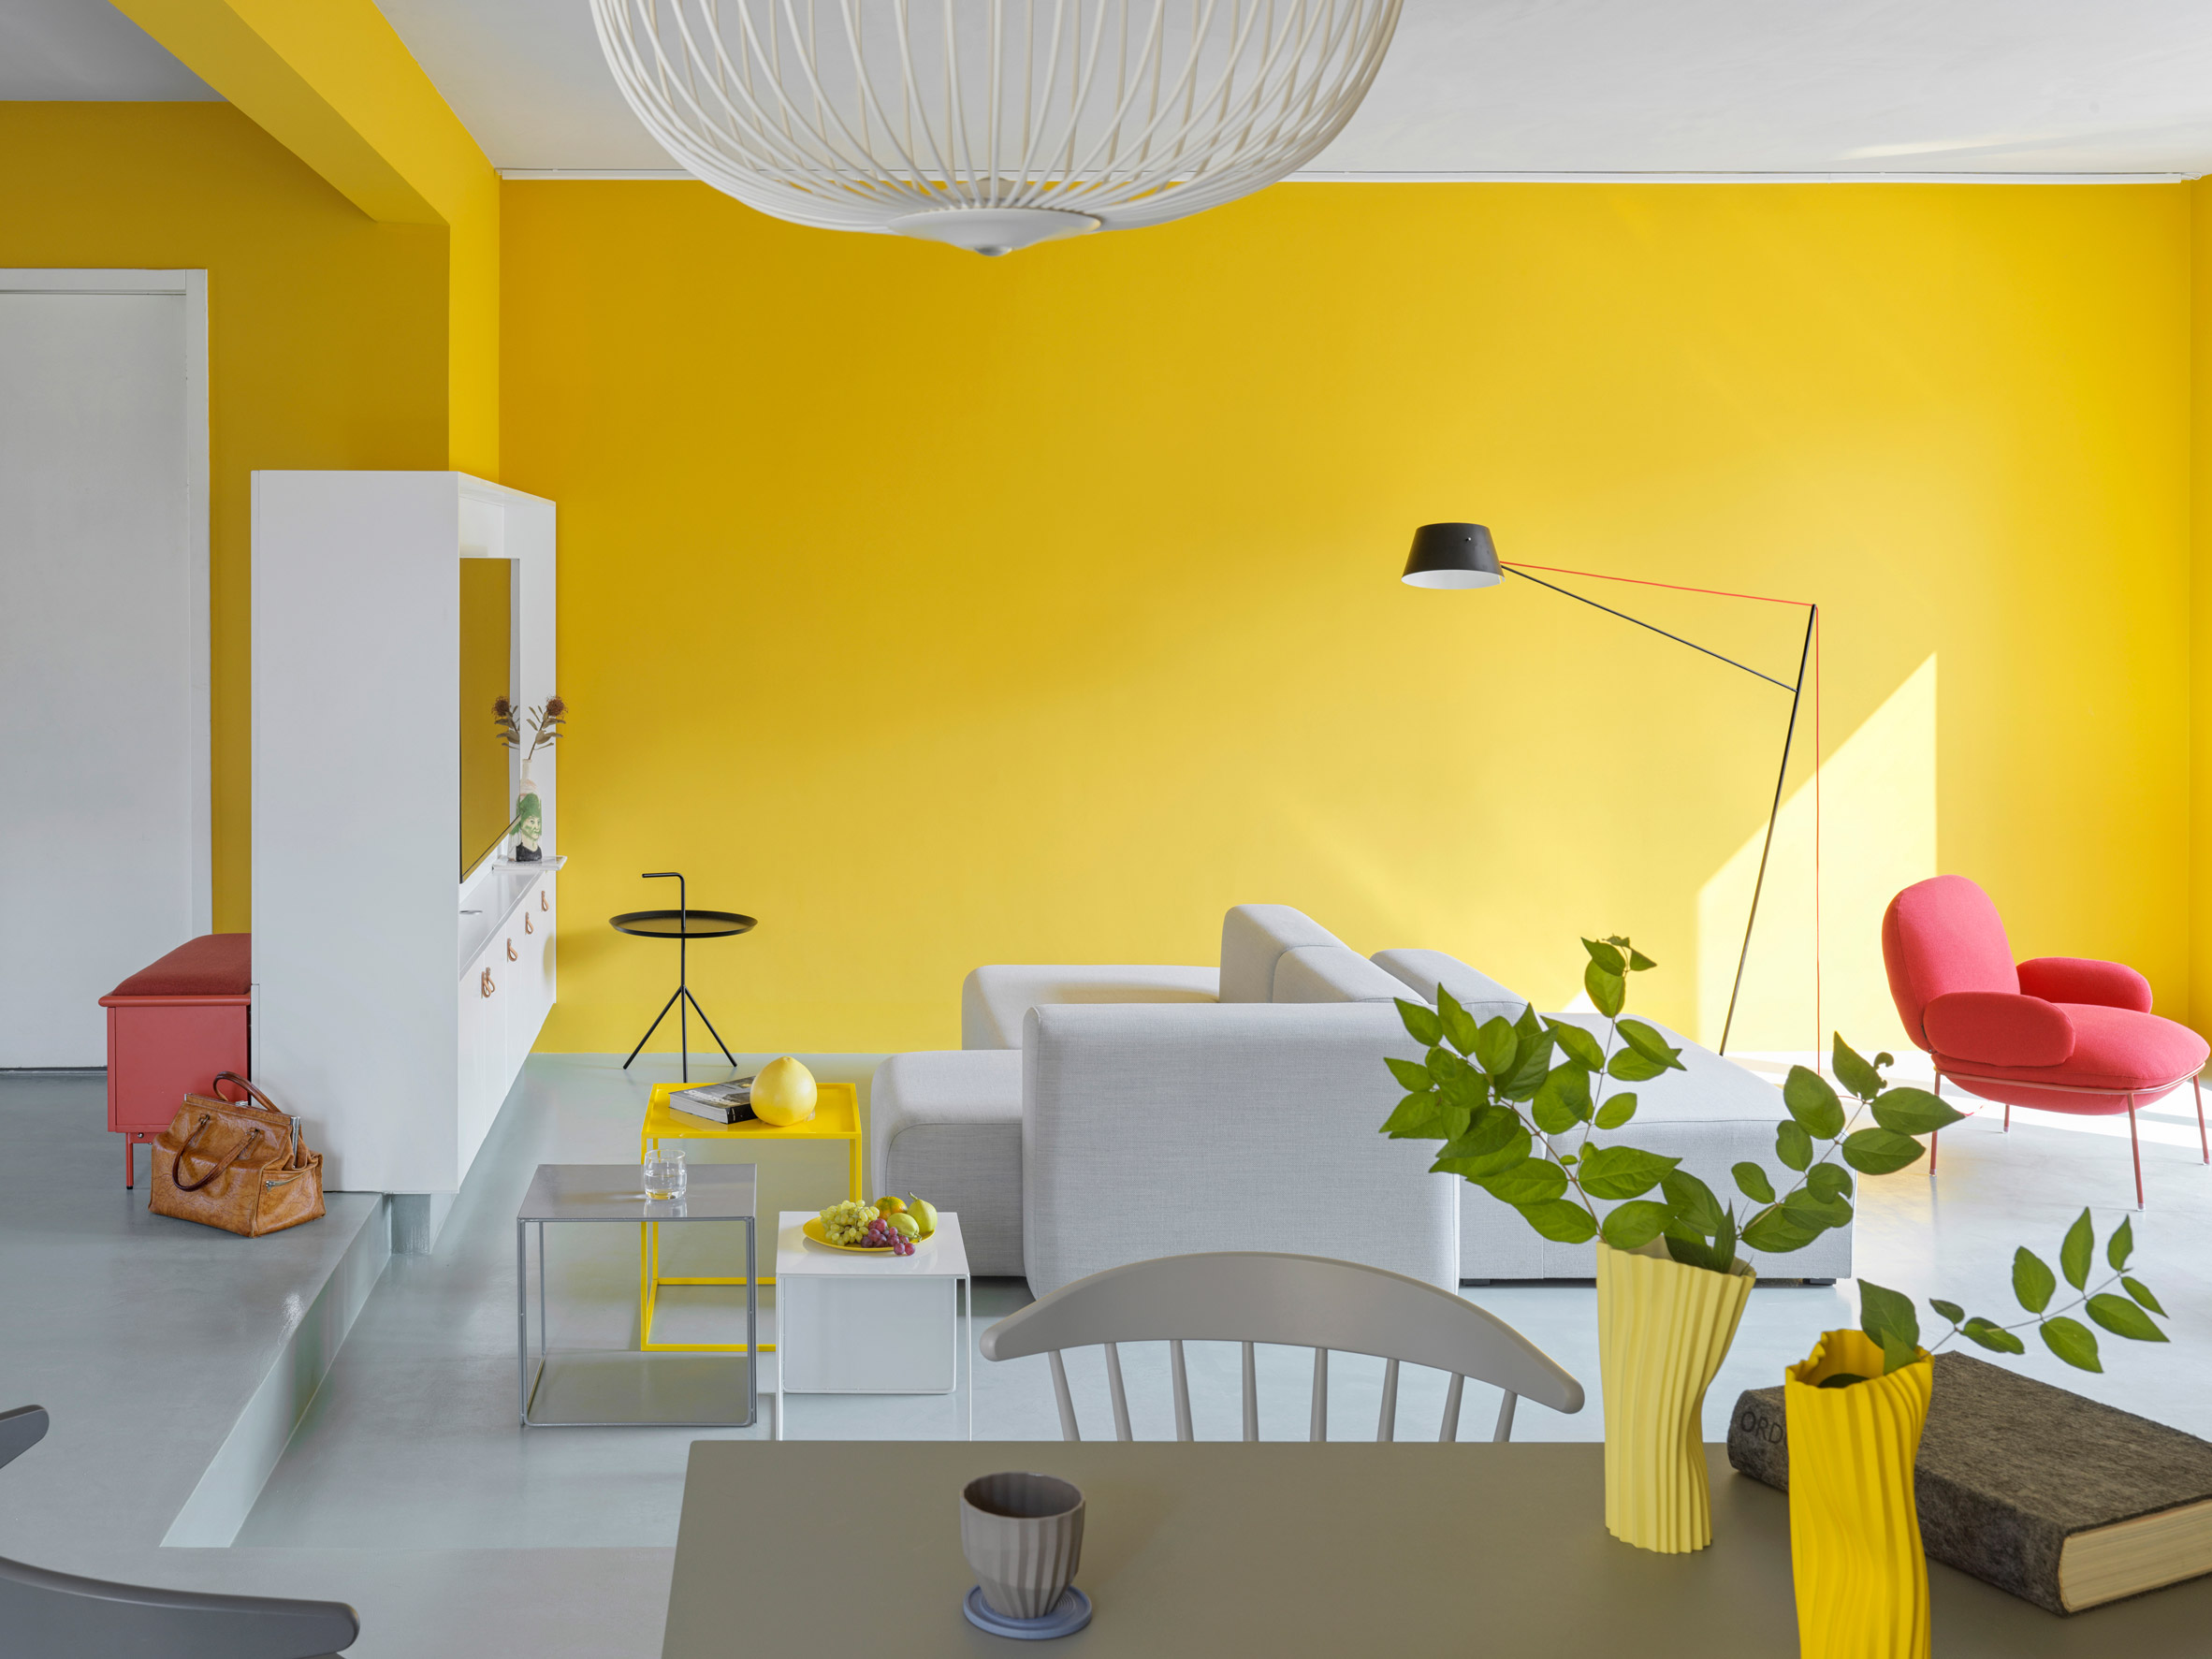 MDDM Studio uses yellow to energise interiors of Beijing's House P